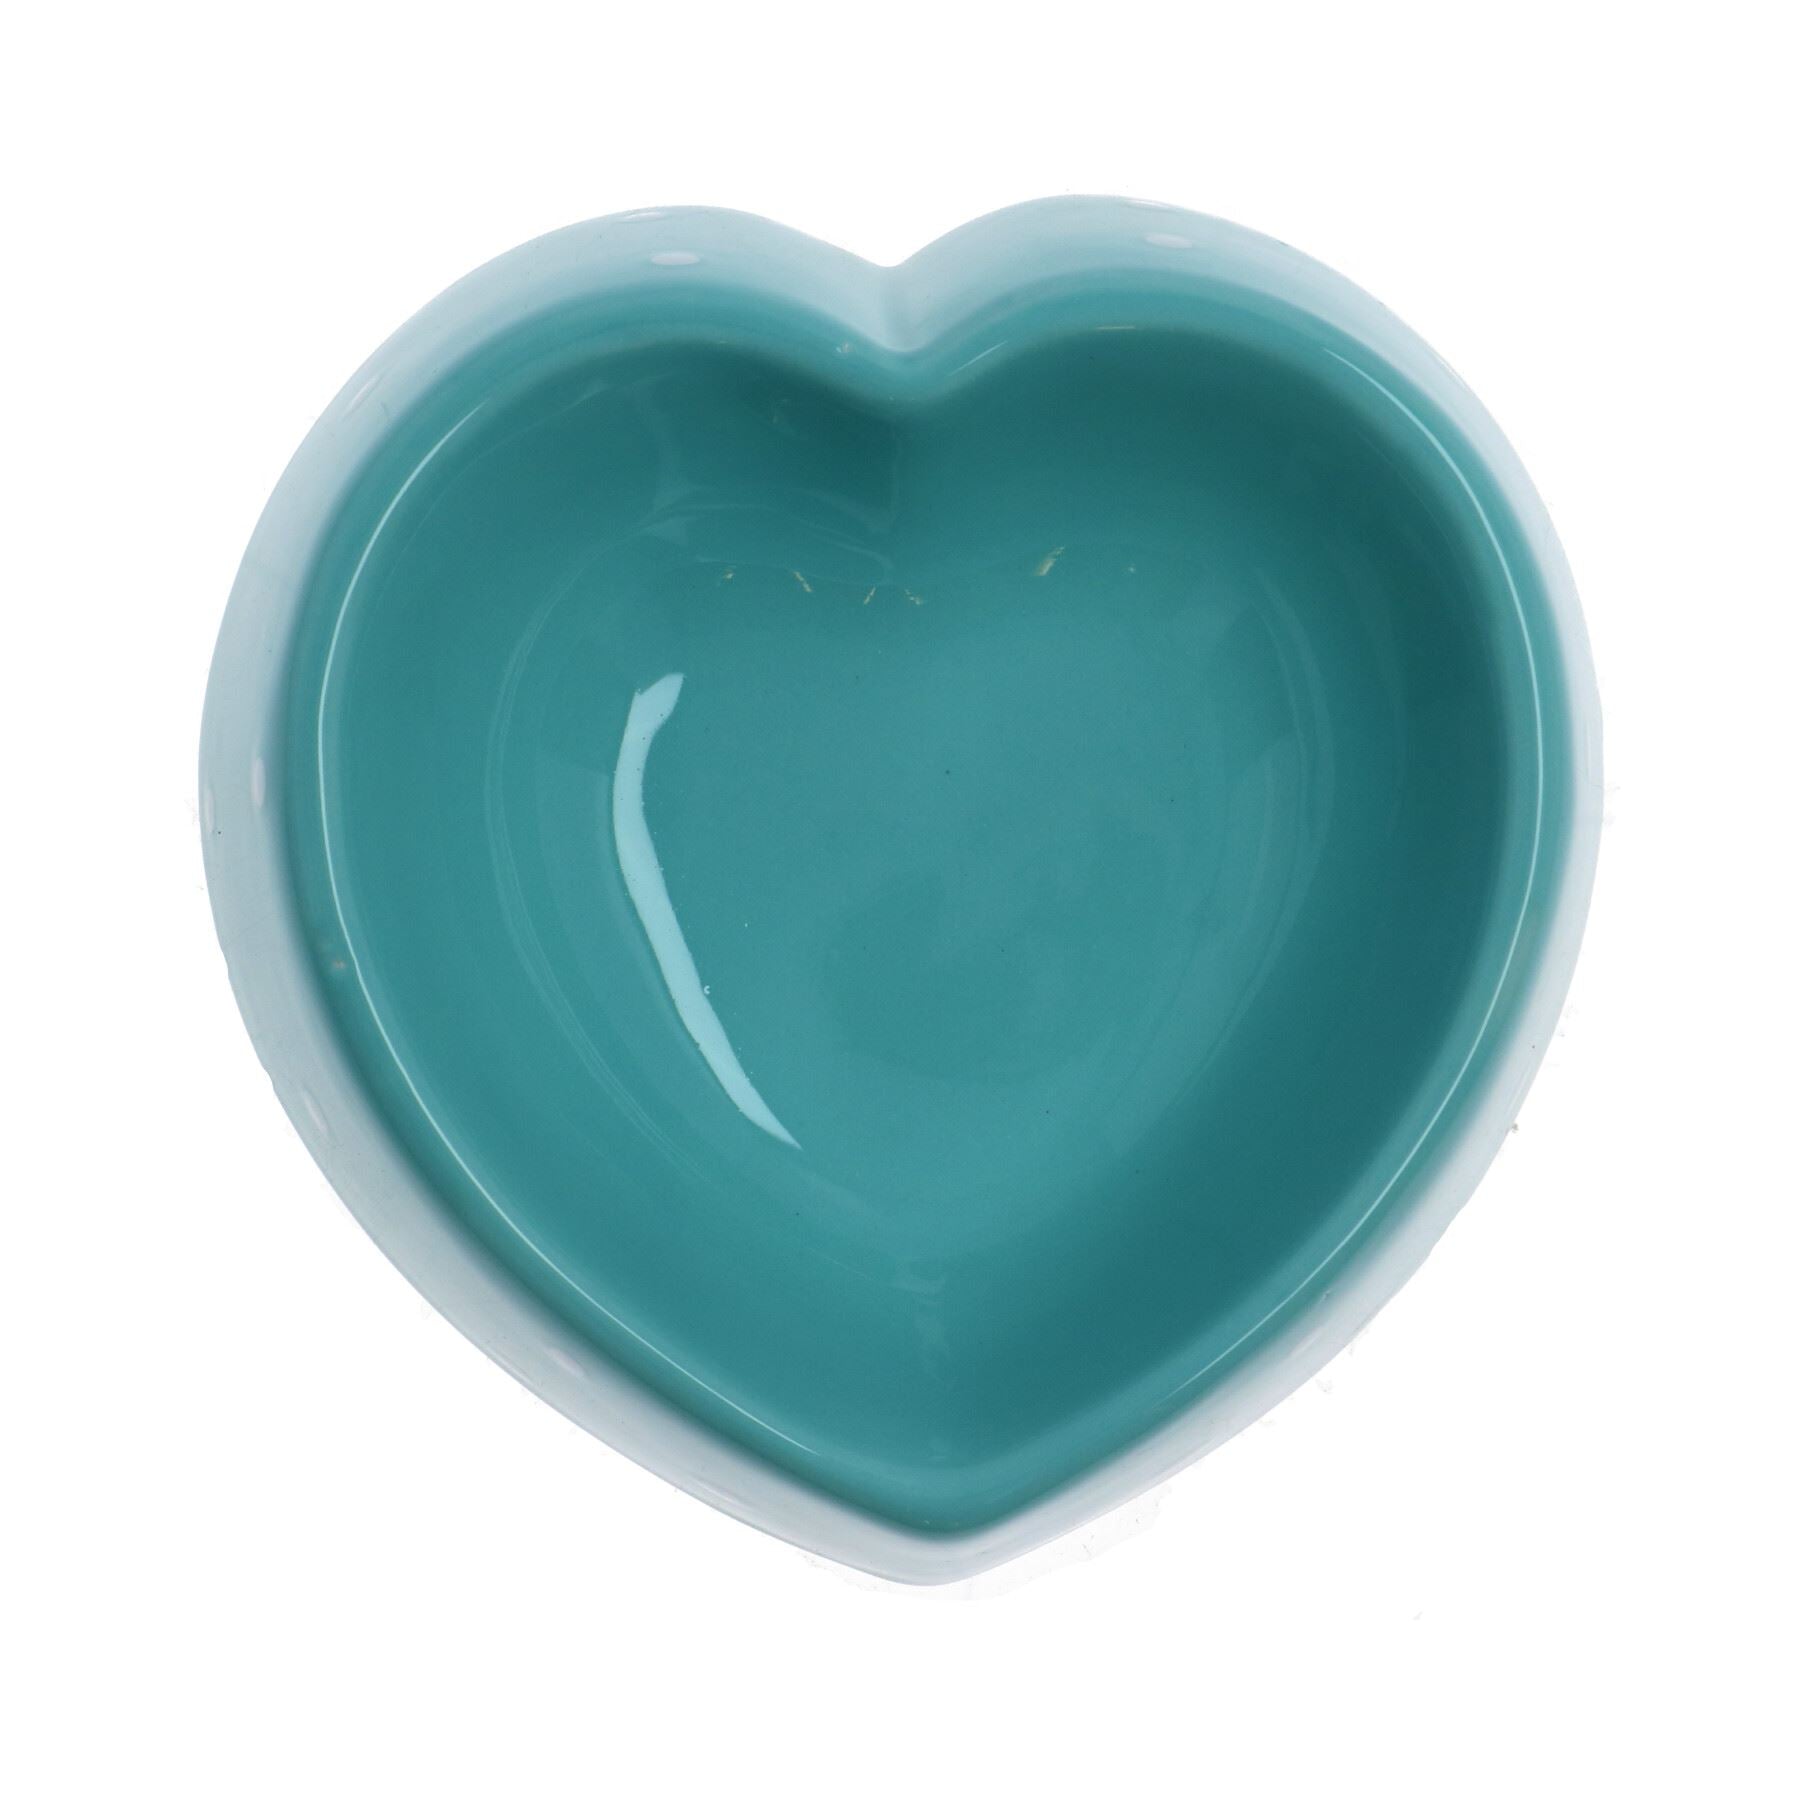 Polka Dot Heart Bowl - Blue